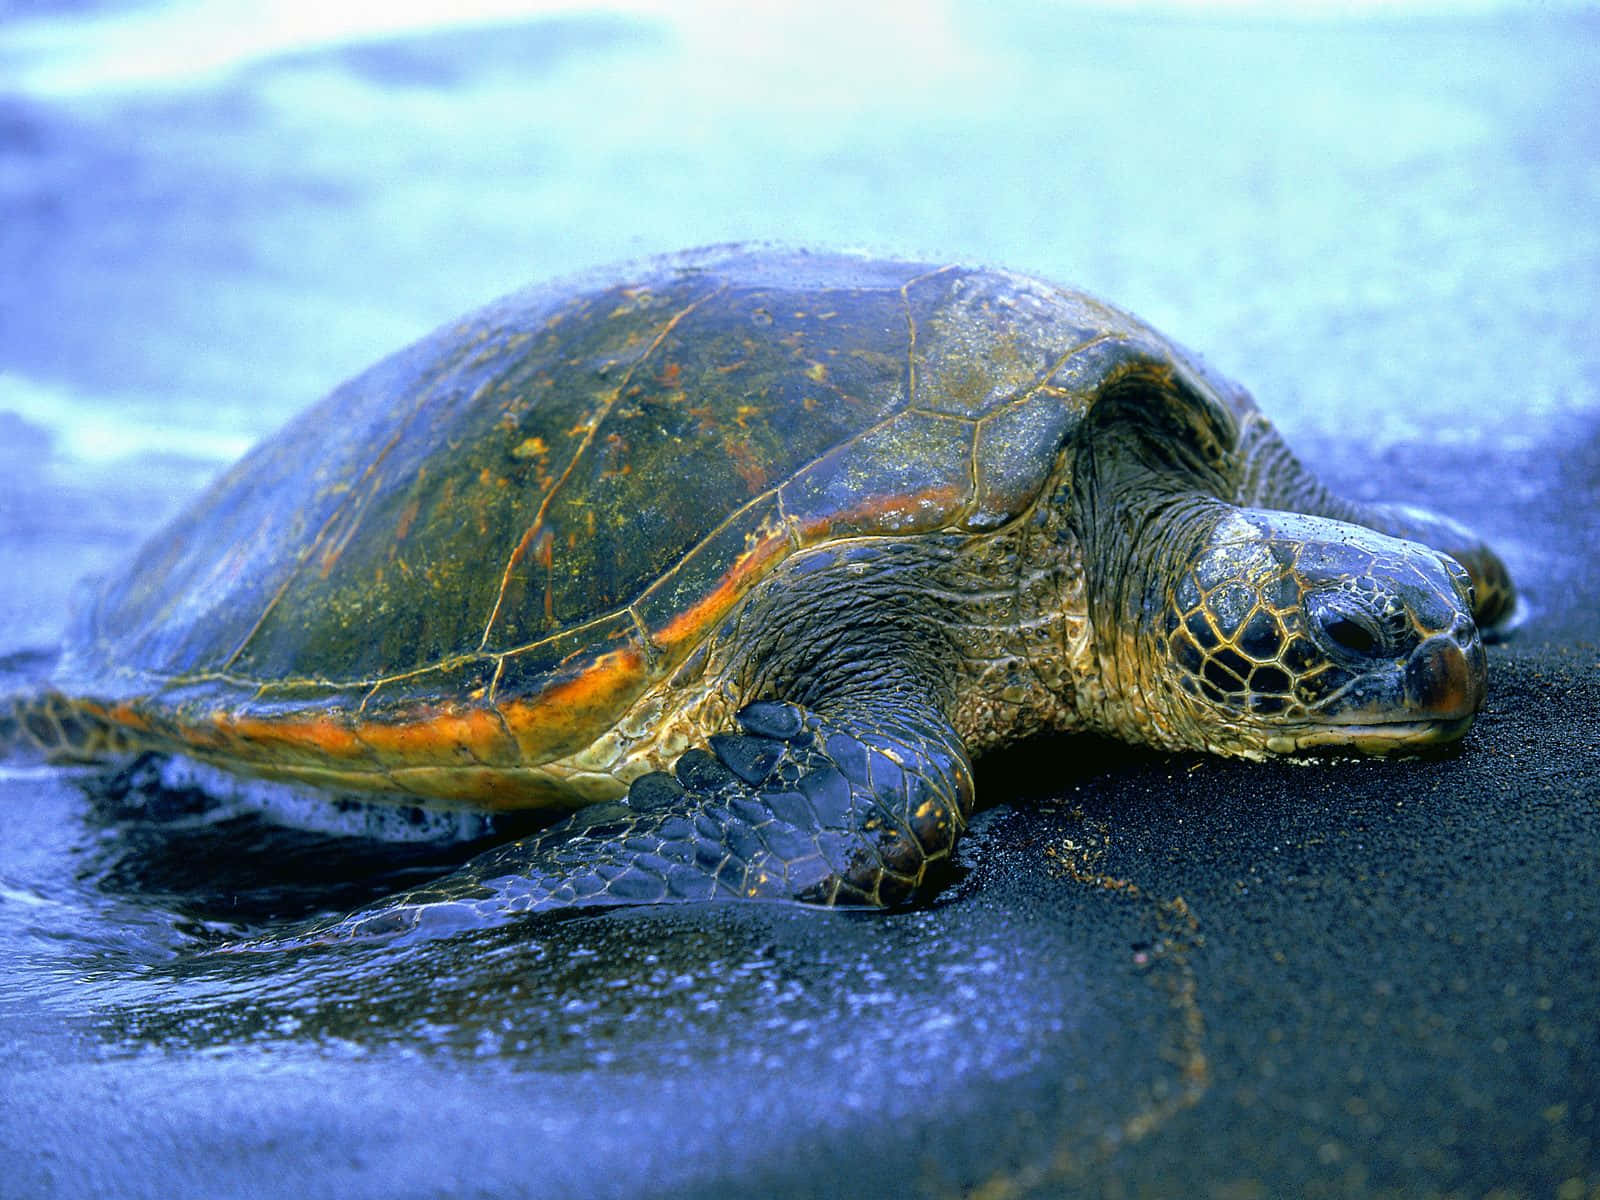 Caption: Majestic Sea Turtle Exploring the Ocean Depths